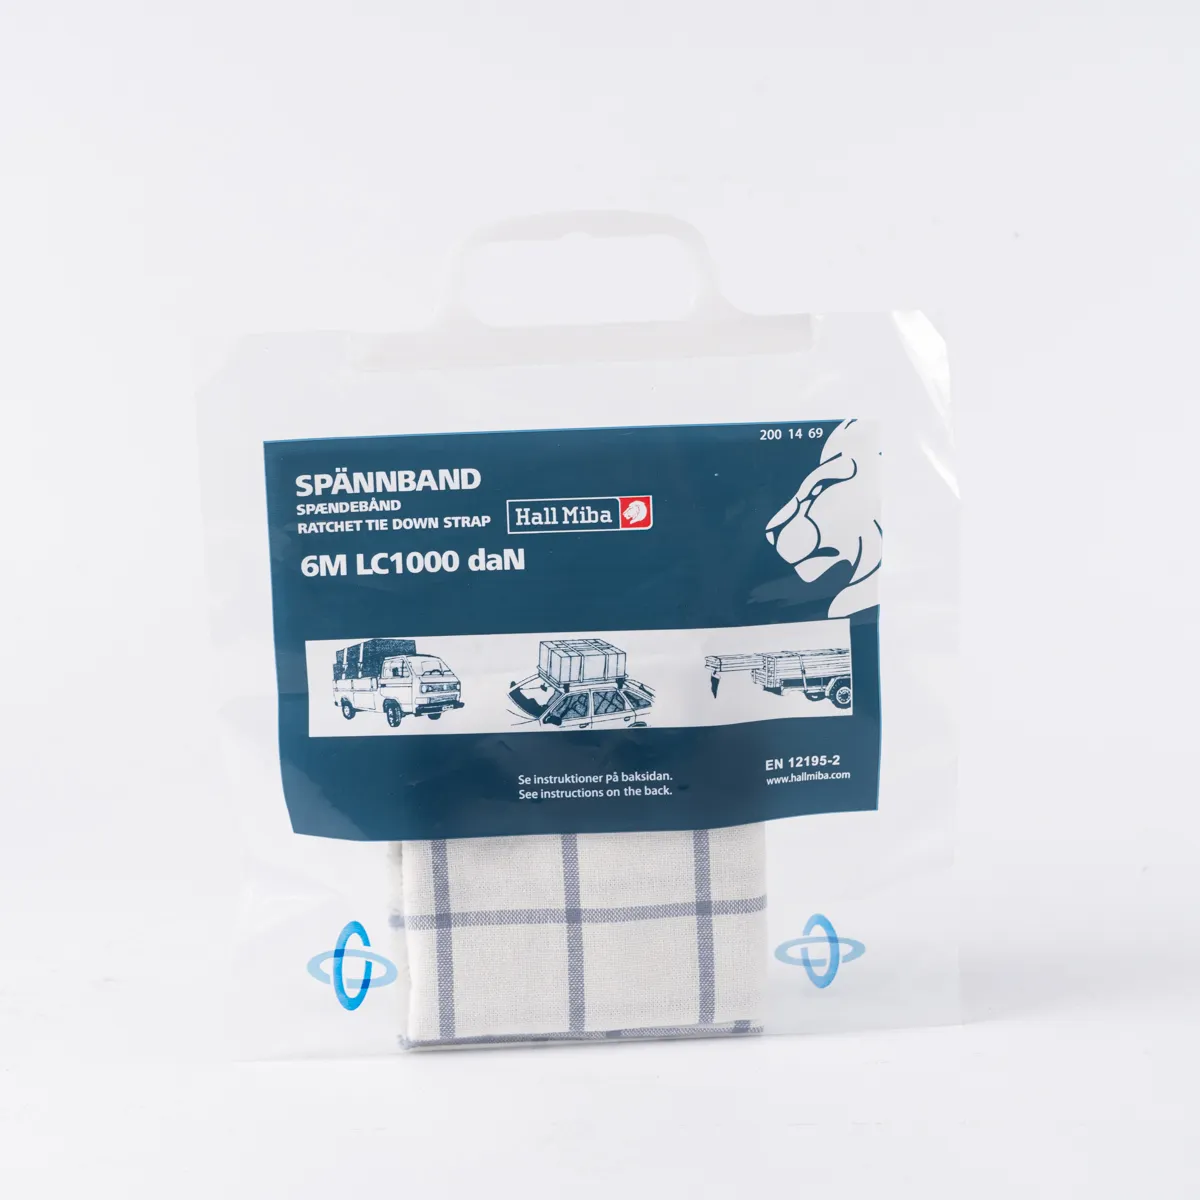 Factory Ice Packs Reusable Ice Packs Aluminum foil Ice Packs For Cooler Bag